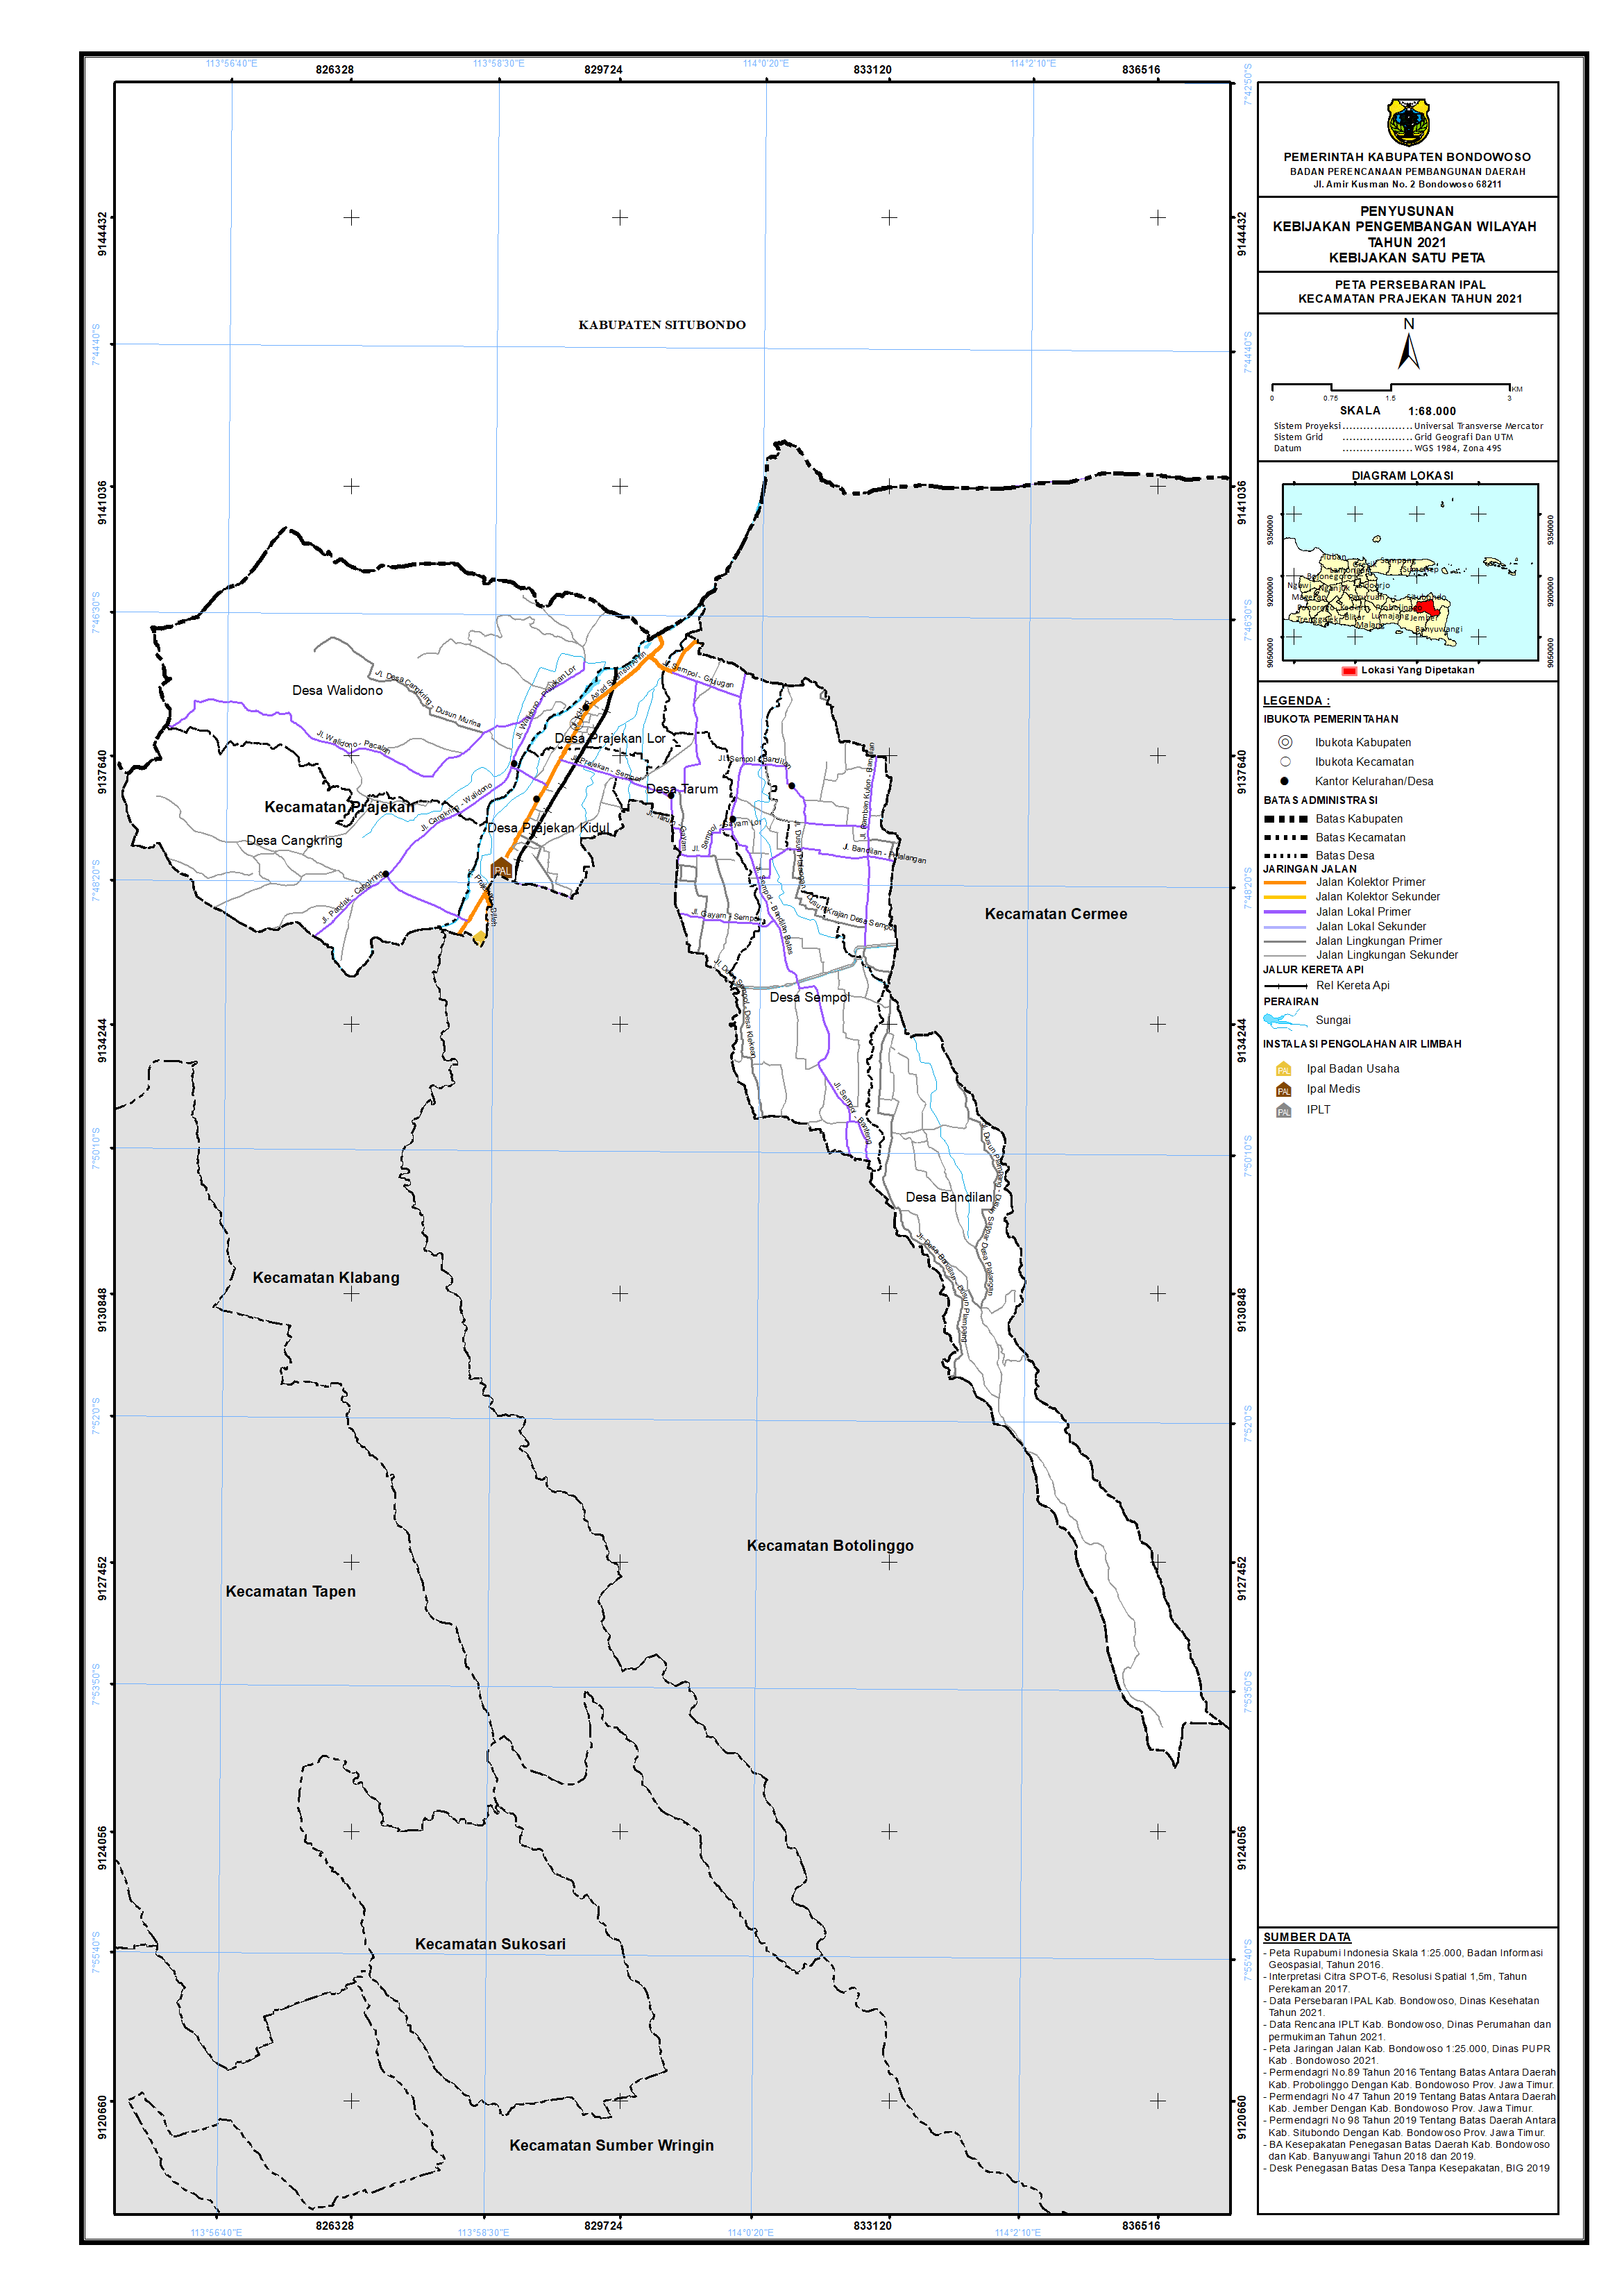 Peta Persebaran IPAL Kecamatan Prajekan.png